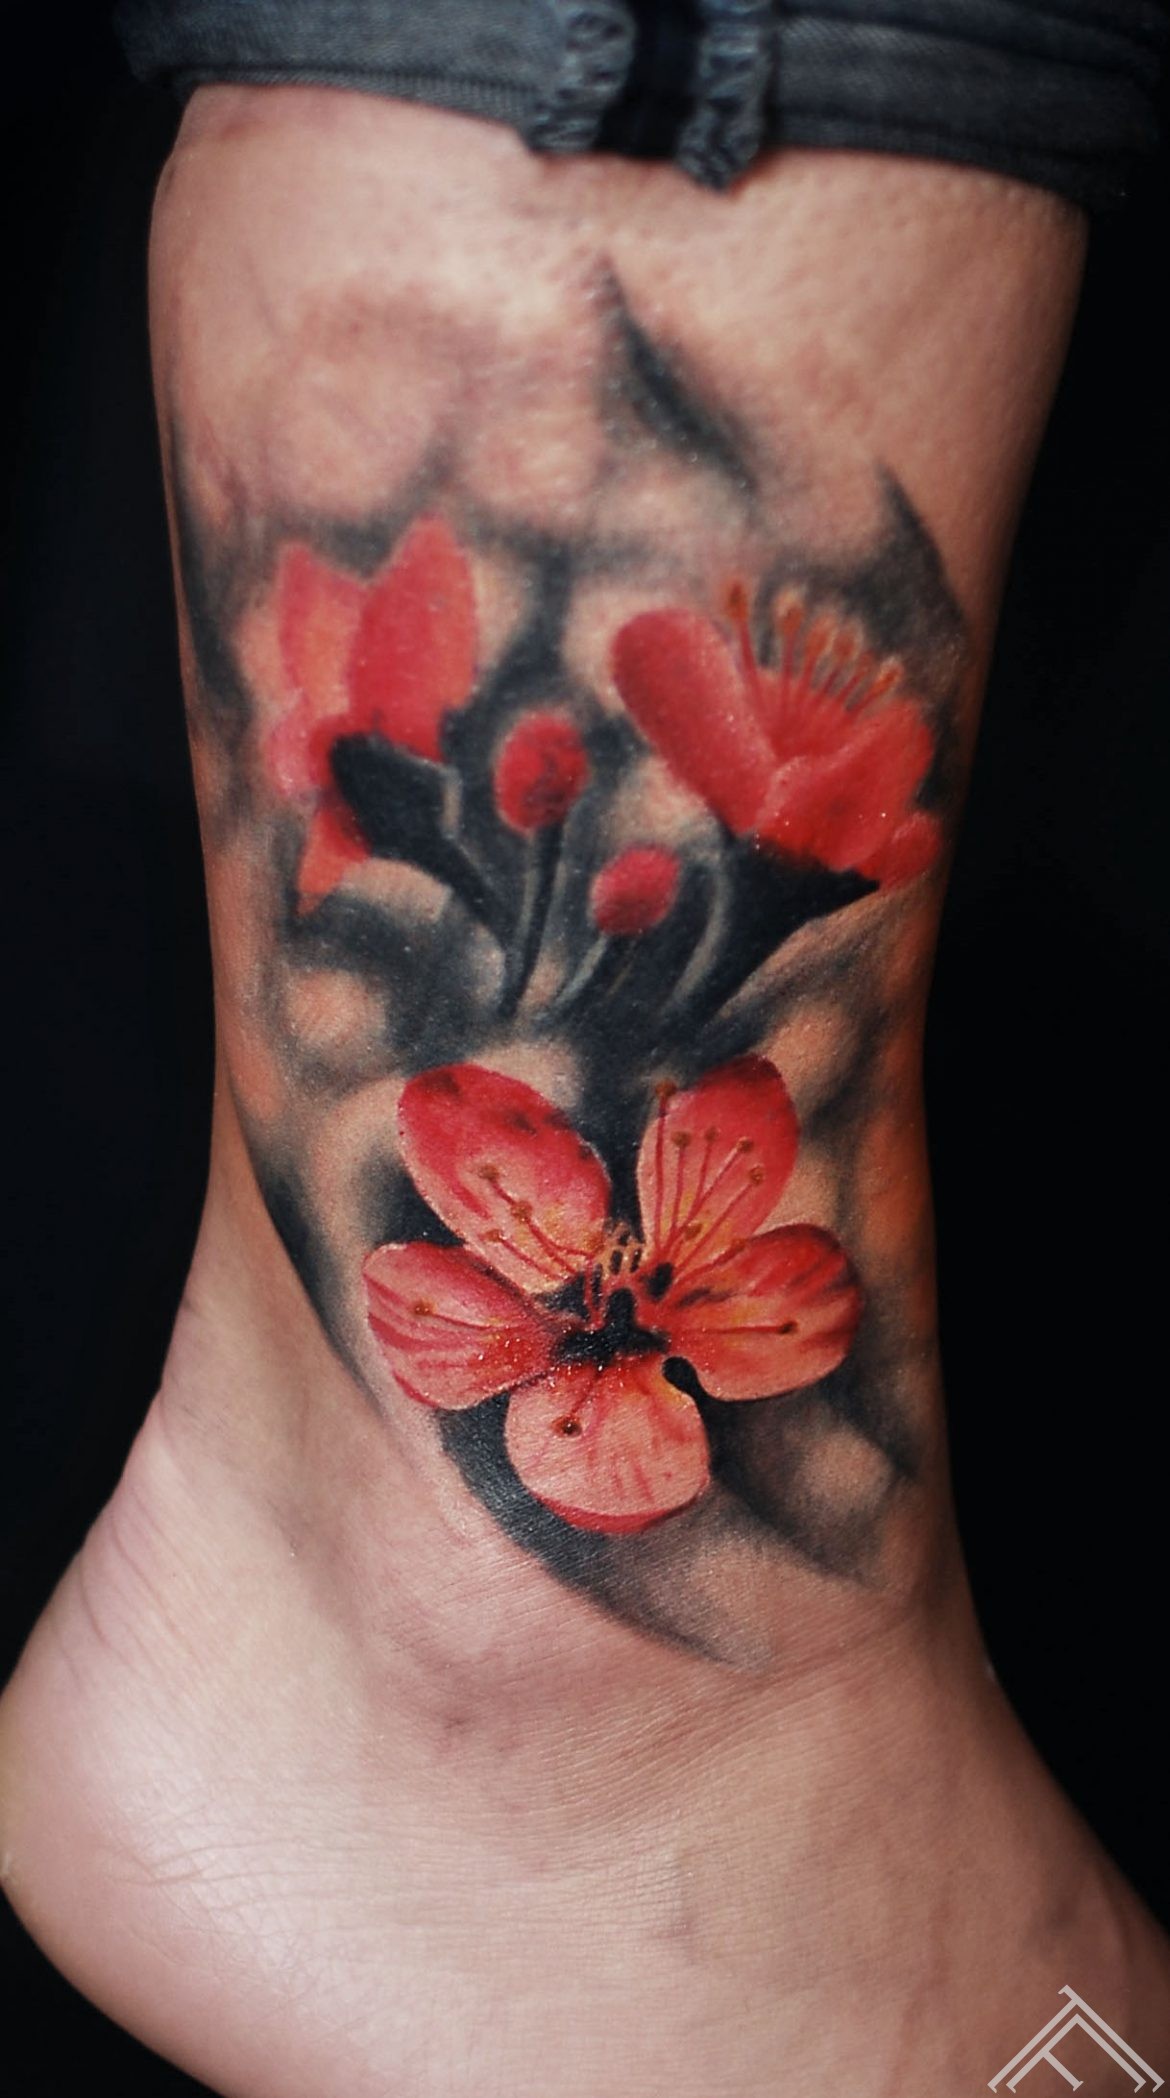 andersons_tattoo_flower_cherryblosom_tattoofrequency